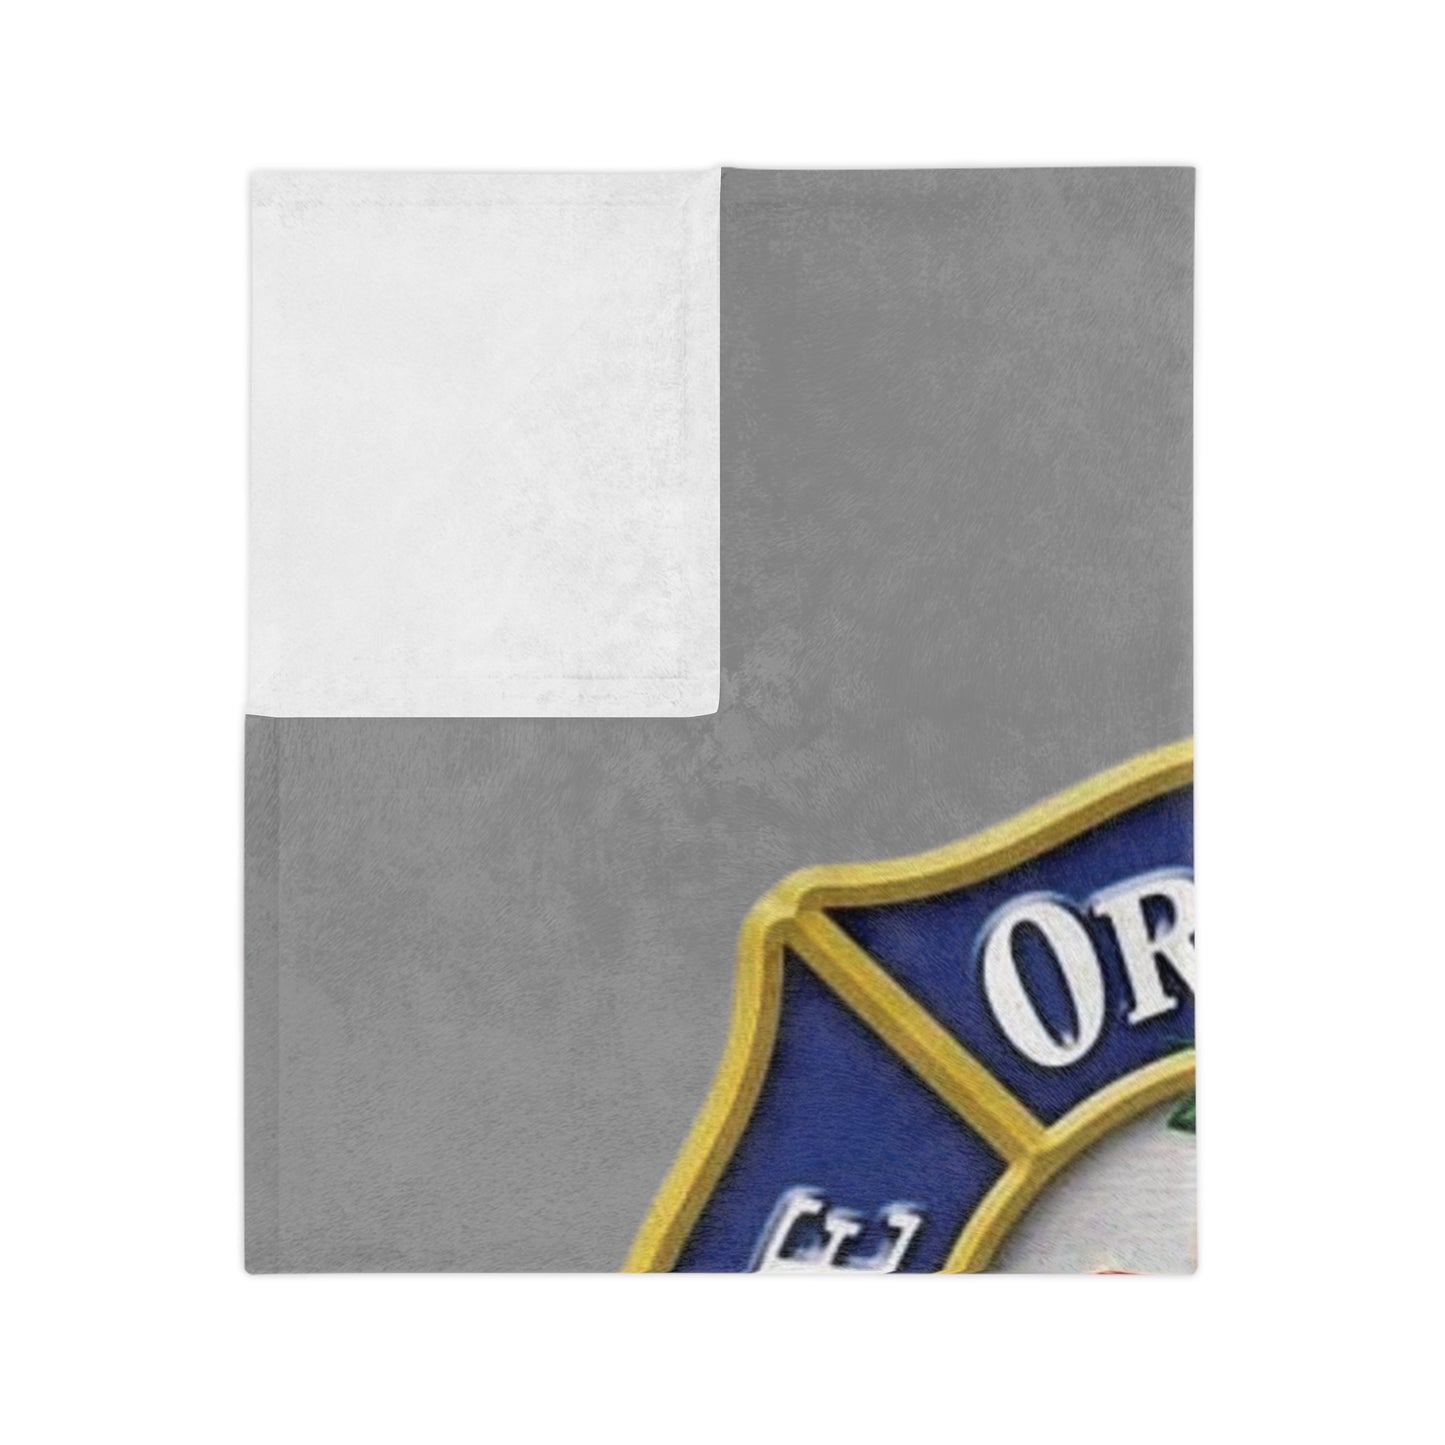 Orange County Fire Rescue Department Logo Velveteen Minky Blanket